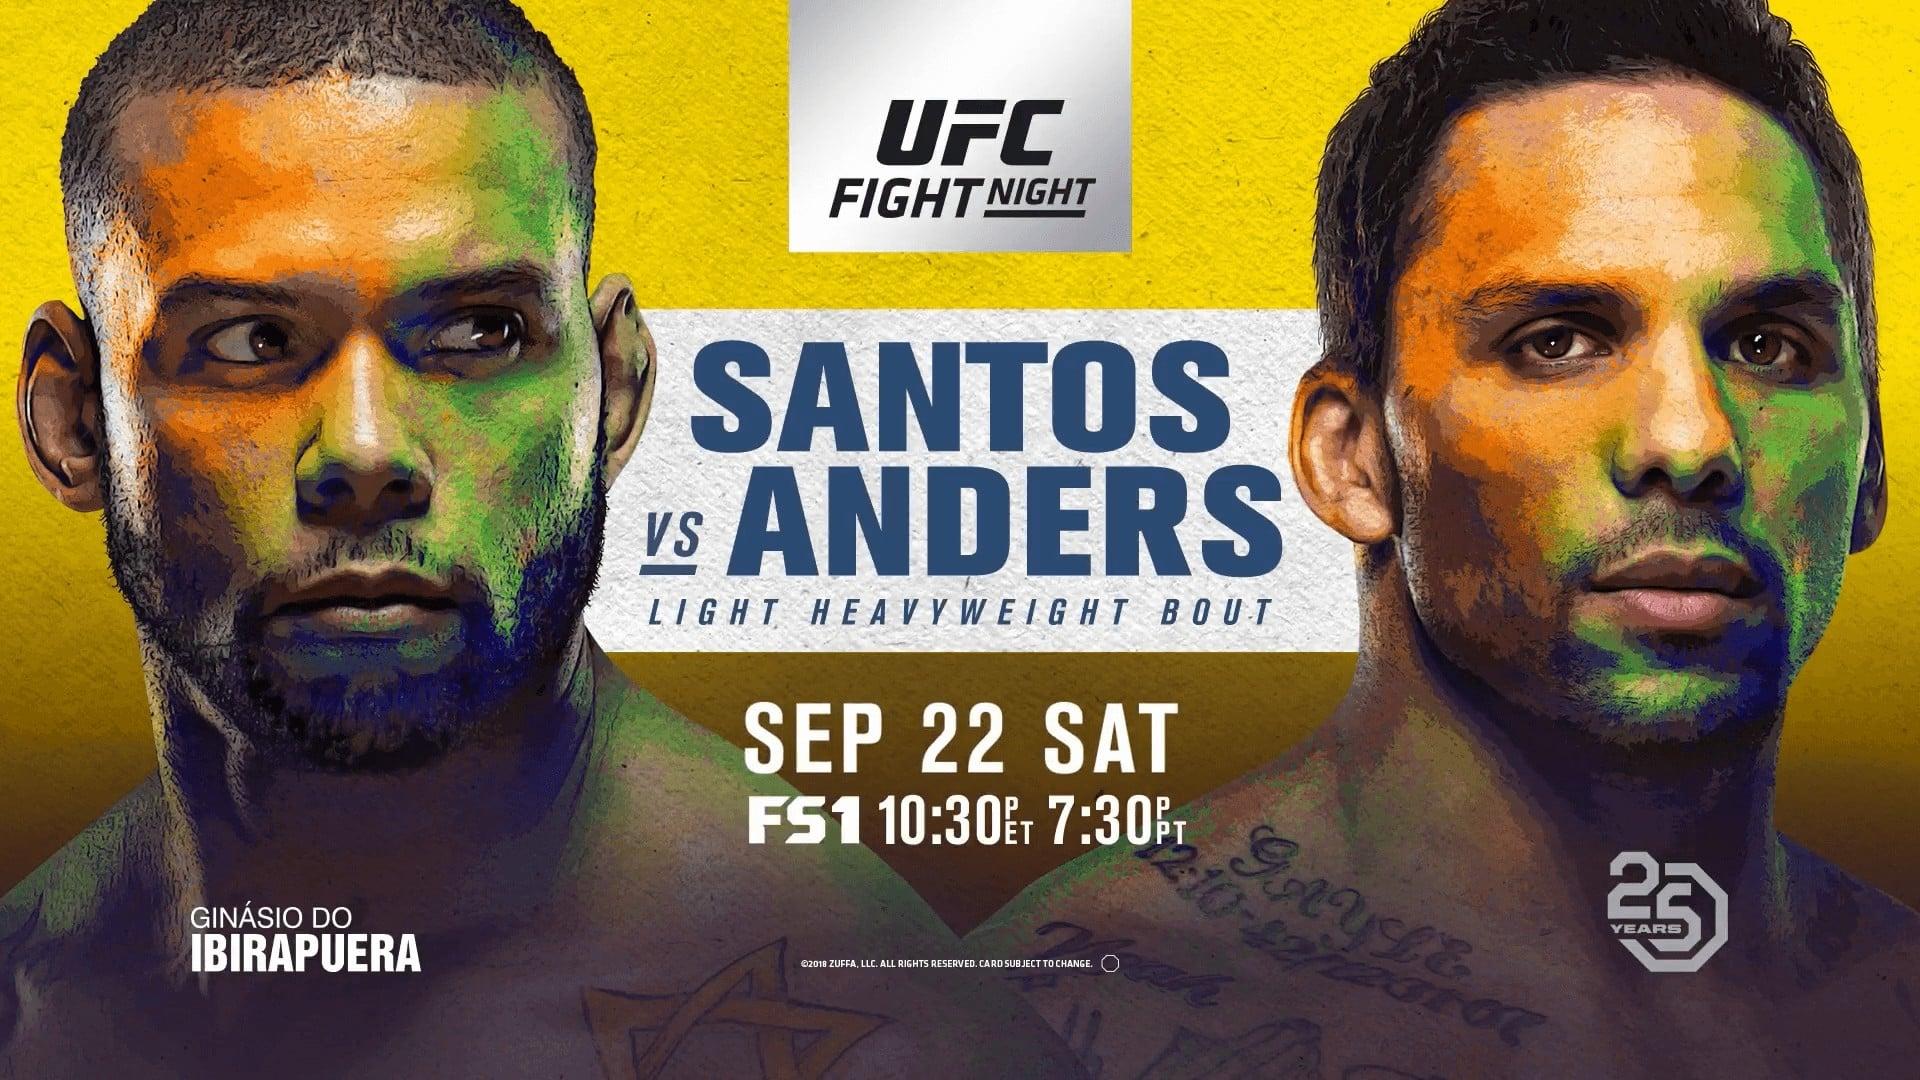 UFC Fight Night 137: Santos vs. Anders backdrop